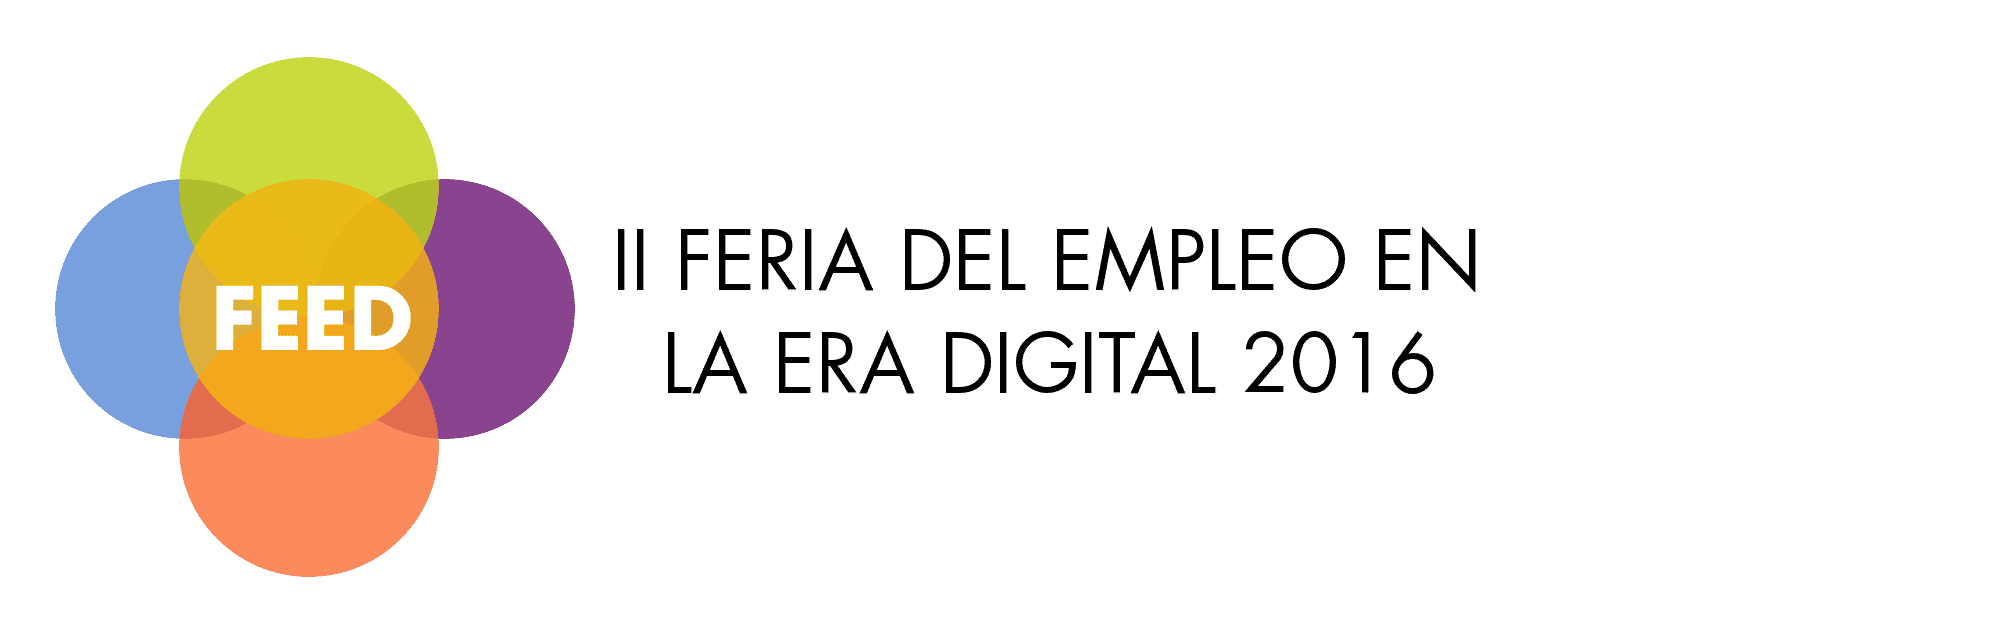 logo feria del empleo en la era digital formato 2016